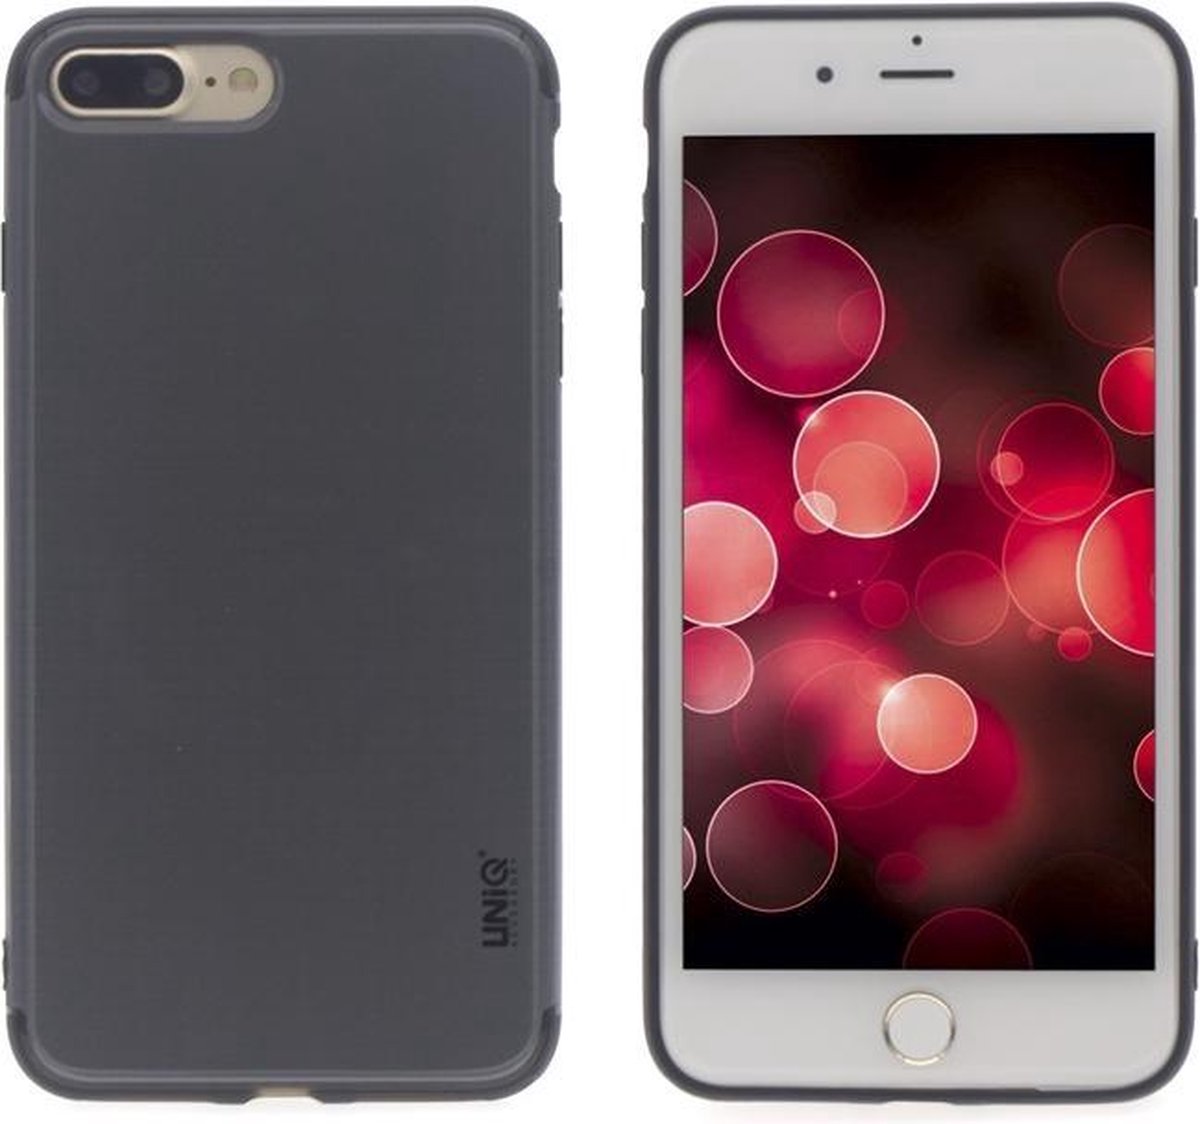 UNIQ Accessory iPhone 7-8 Plus Back Cover hoesje TPU - Zilver